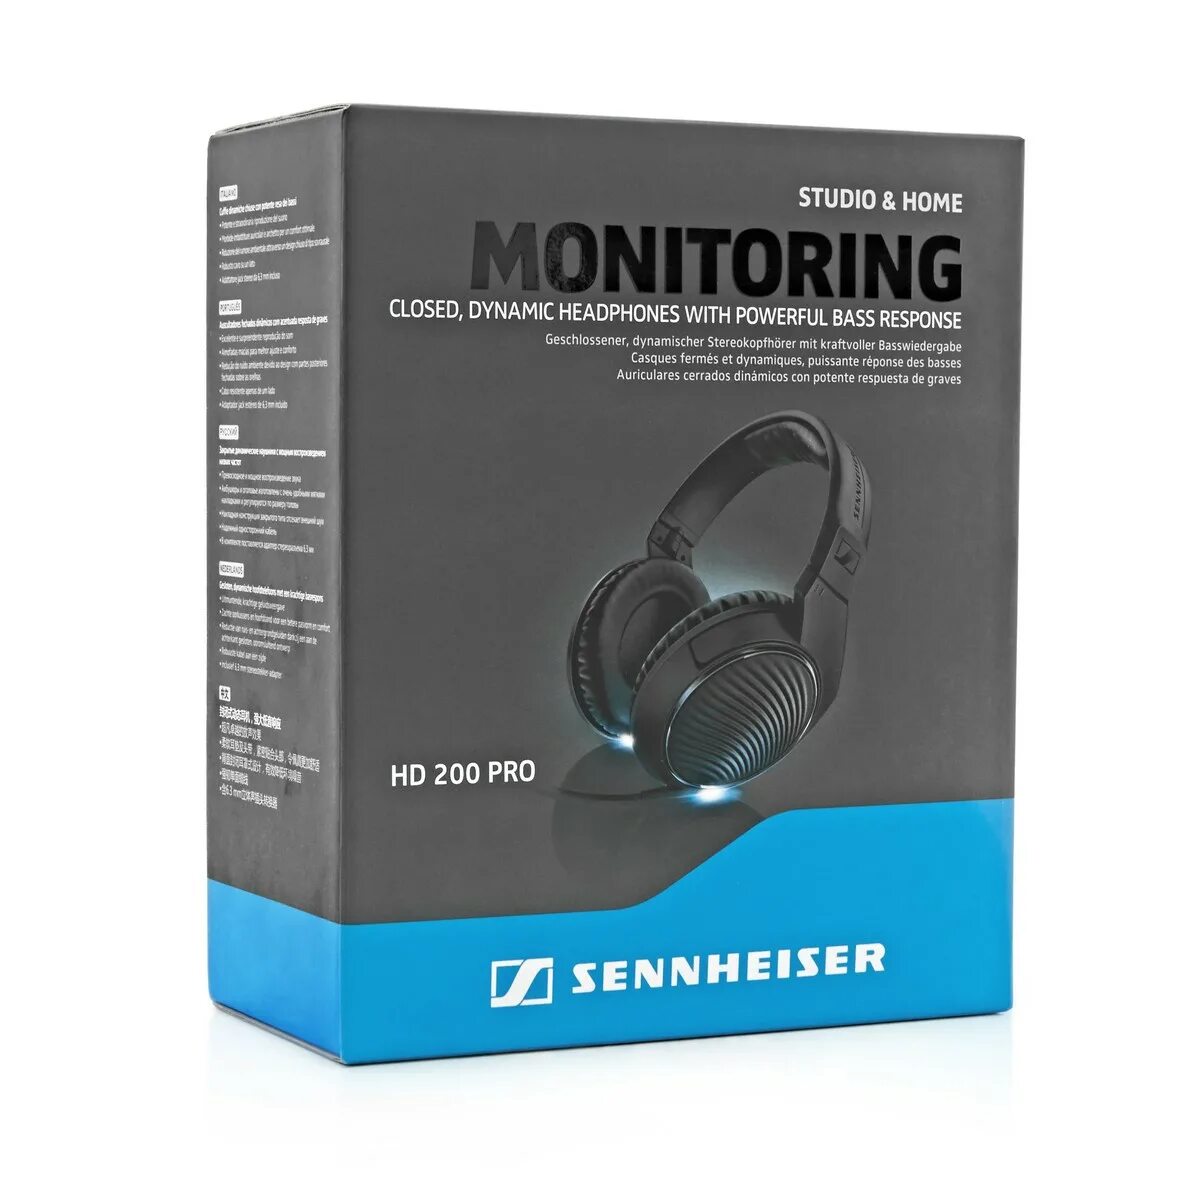 Sennheiser pro купить. Sennheiser 200 Pro. Sennheiser HD 200. Наушники Sennheiser HD 200 Pro. Sennheiser monitoring Headset.